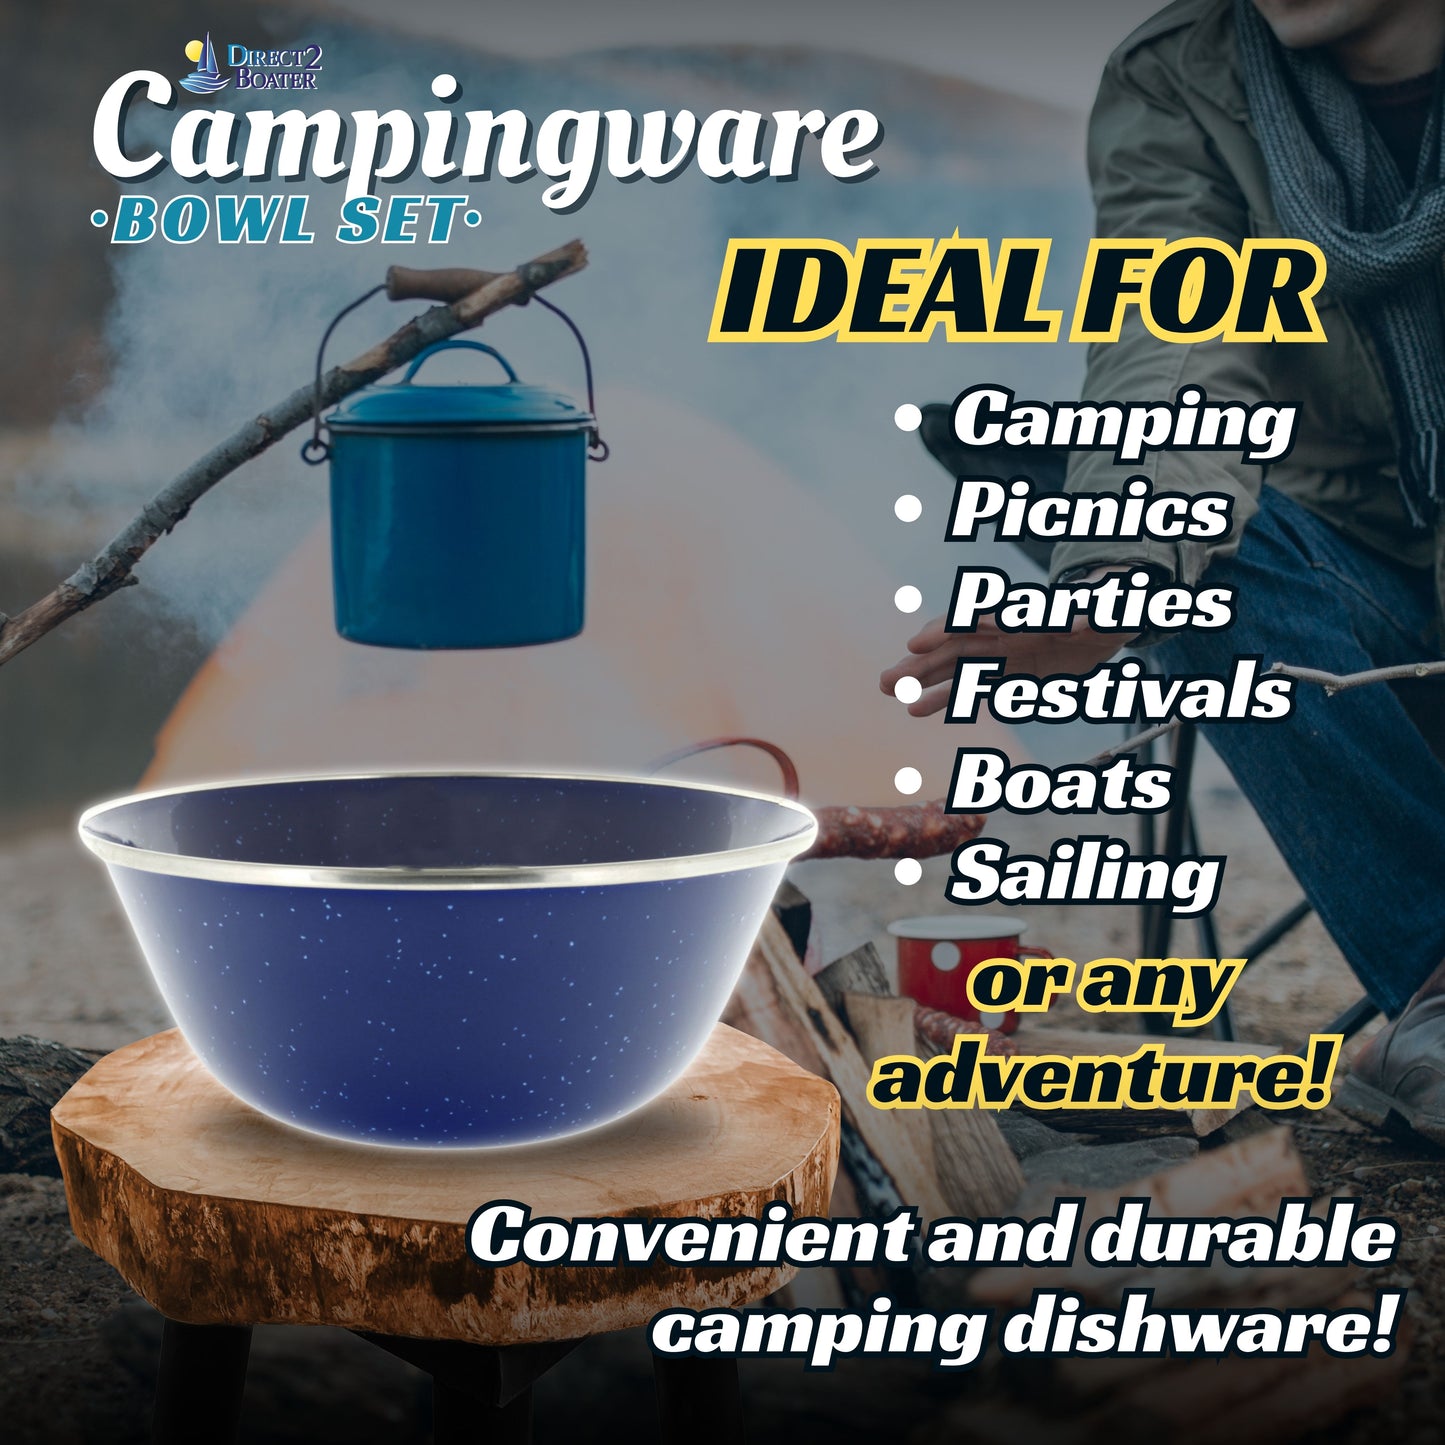 6" Enamel Camping Bowl - 4 Pack Metal Camping Bowl with Blue Enamel Finish - For Camping, Hiking & Picnics